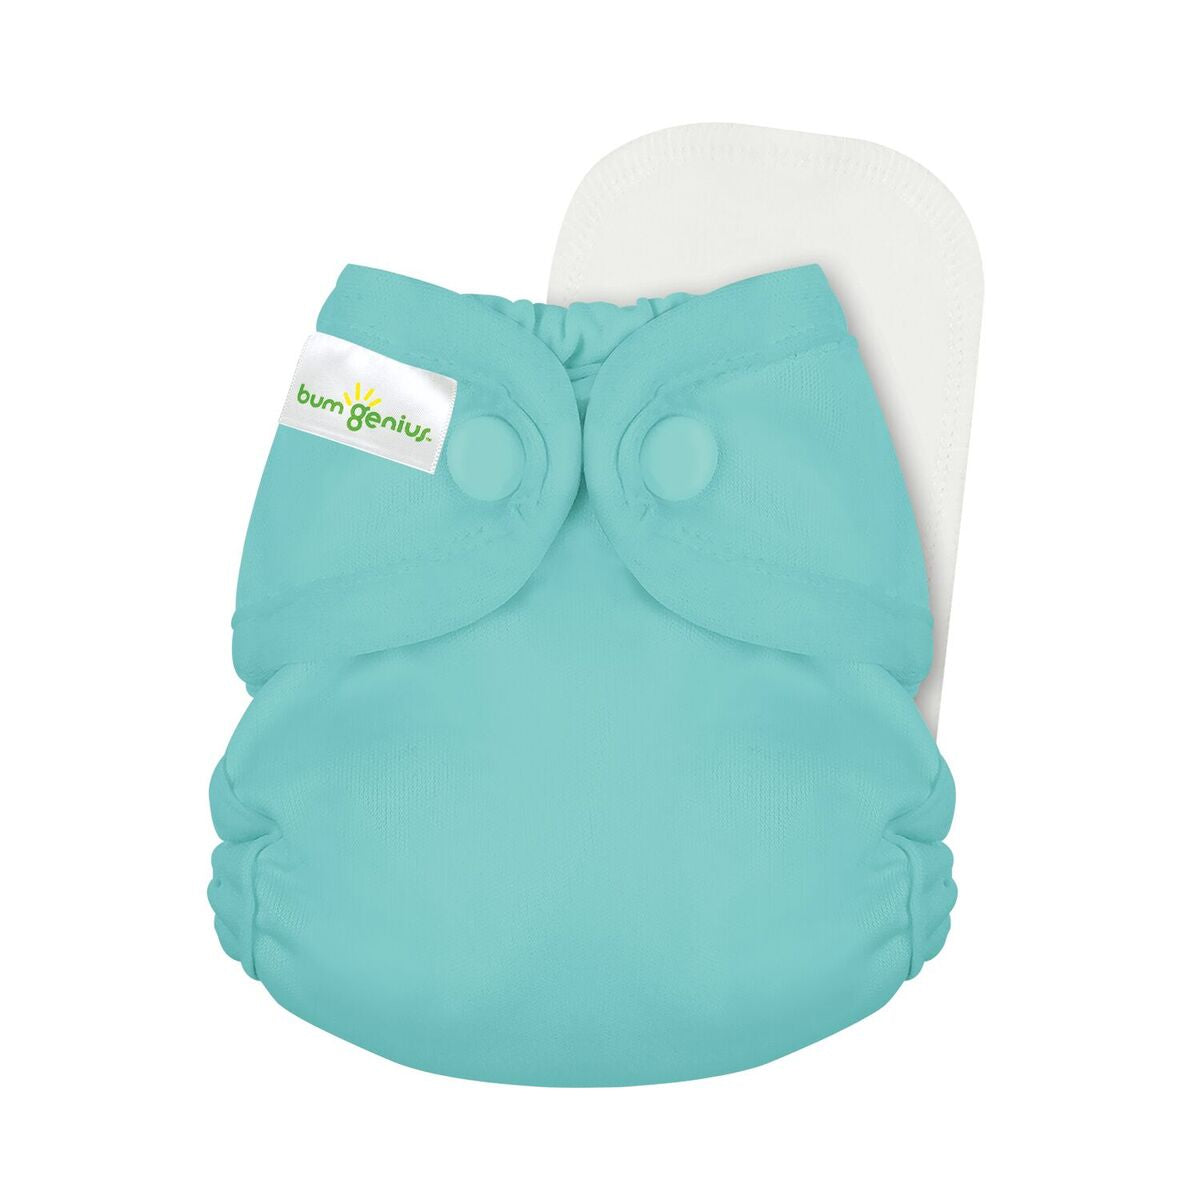 Newborn Cloth Diapers - MOST EFFECTIVE! - Jillian's Drawers